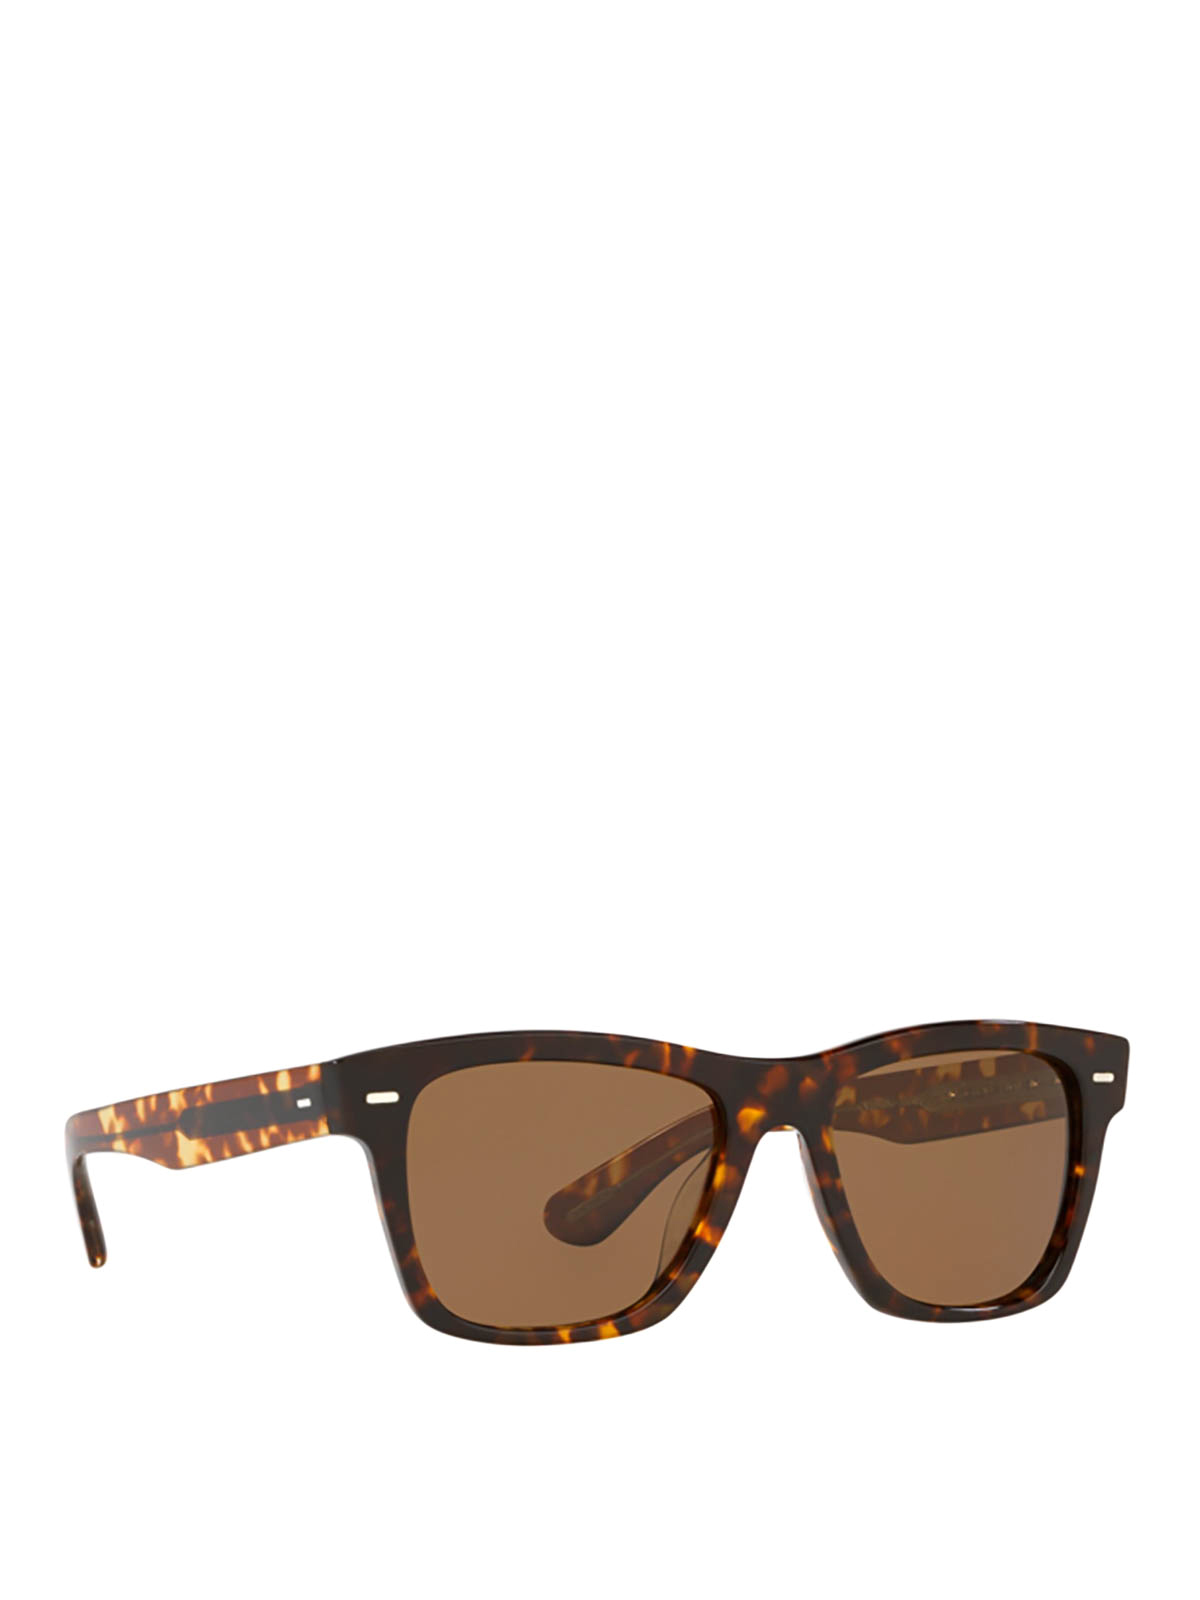 Sunglasses Oliver Peoples - Oliver Sun tortoiseshell sunglasses -  OV5393SU165457